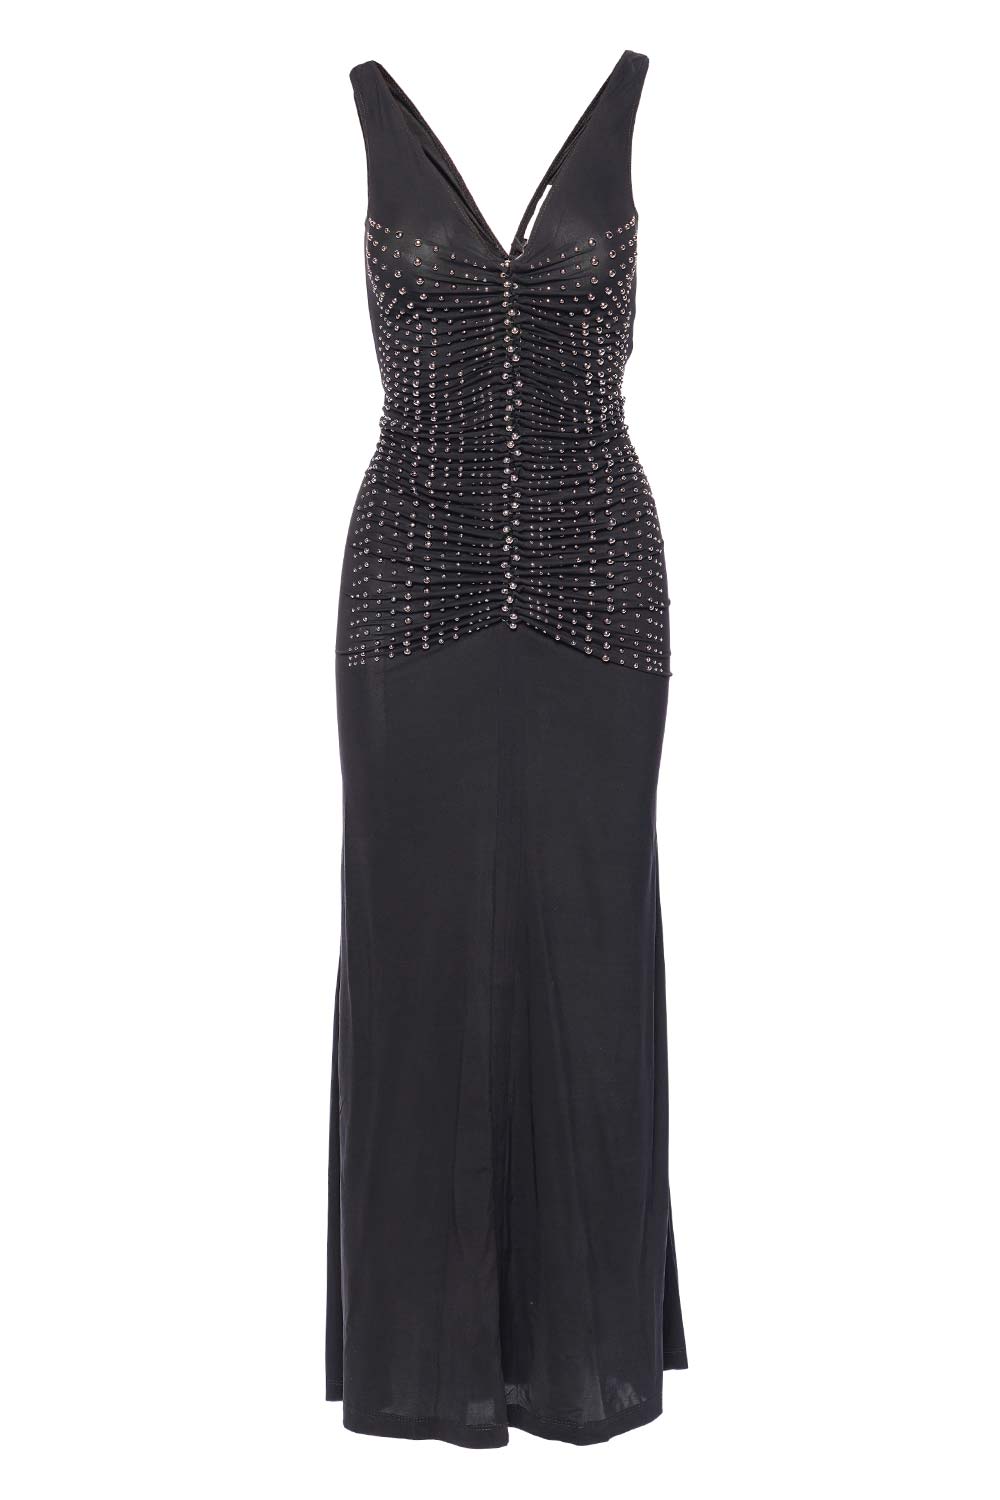 Paco Rabanne Black Studded Sleeveless  Maxi Dress